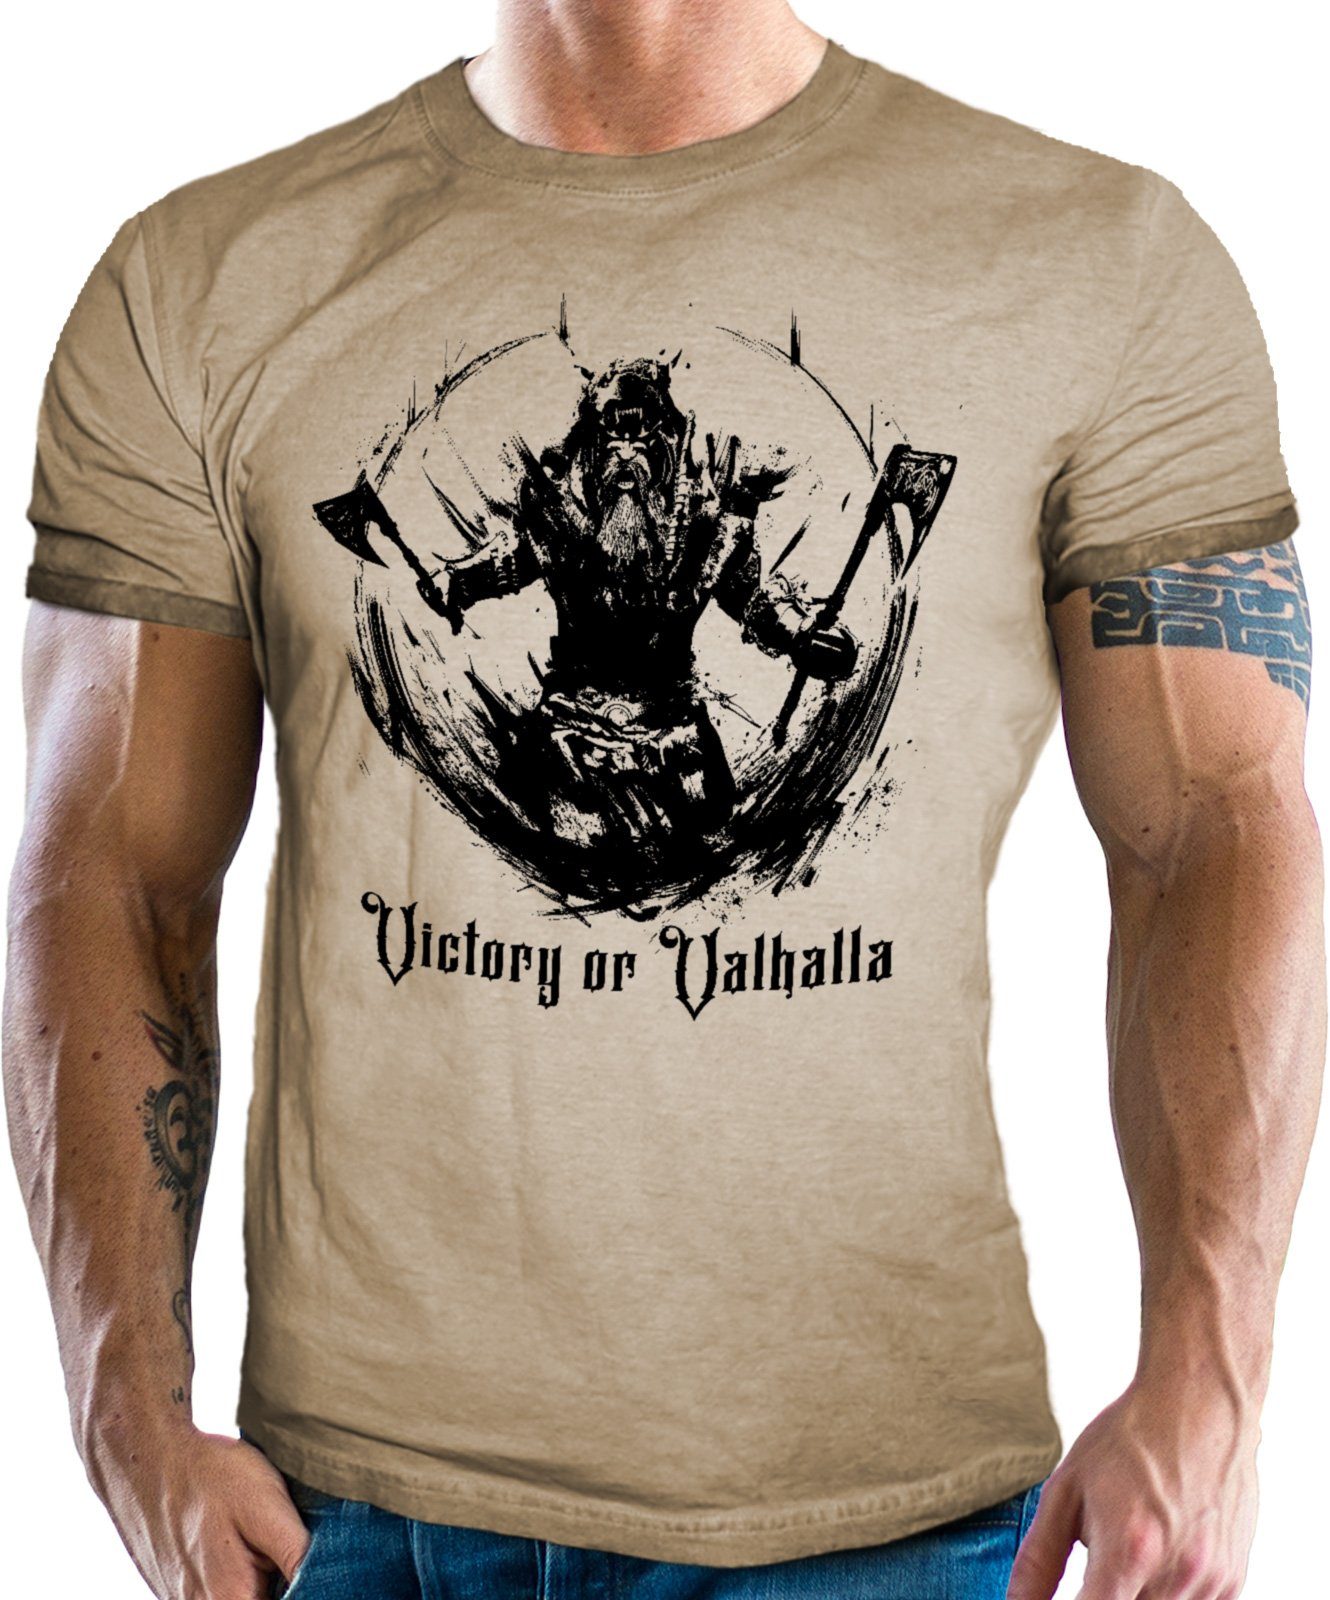 LOBO NEGRO® T-Shirt im vintage retro used Look für Wikinger Fans - Victory or Valhalla